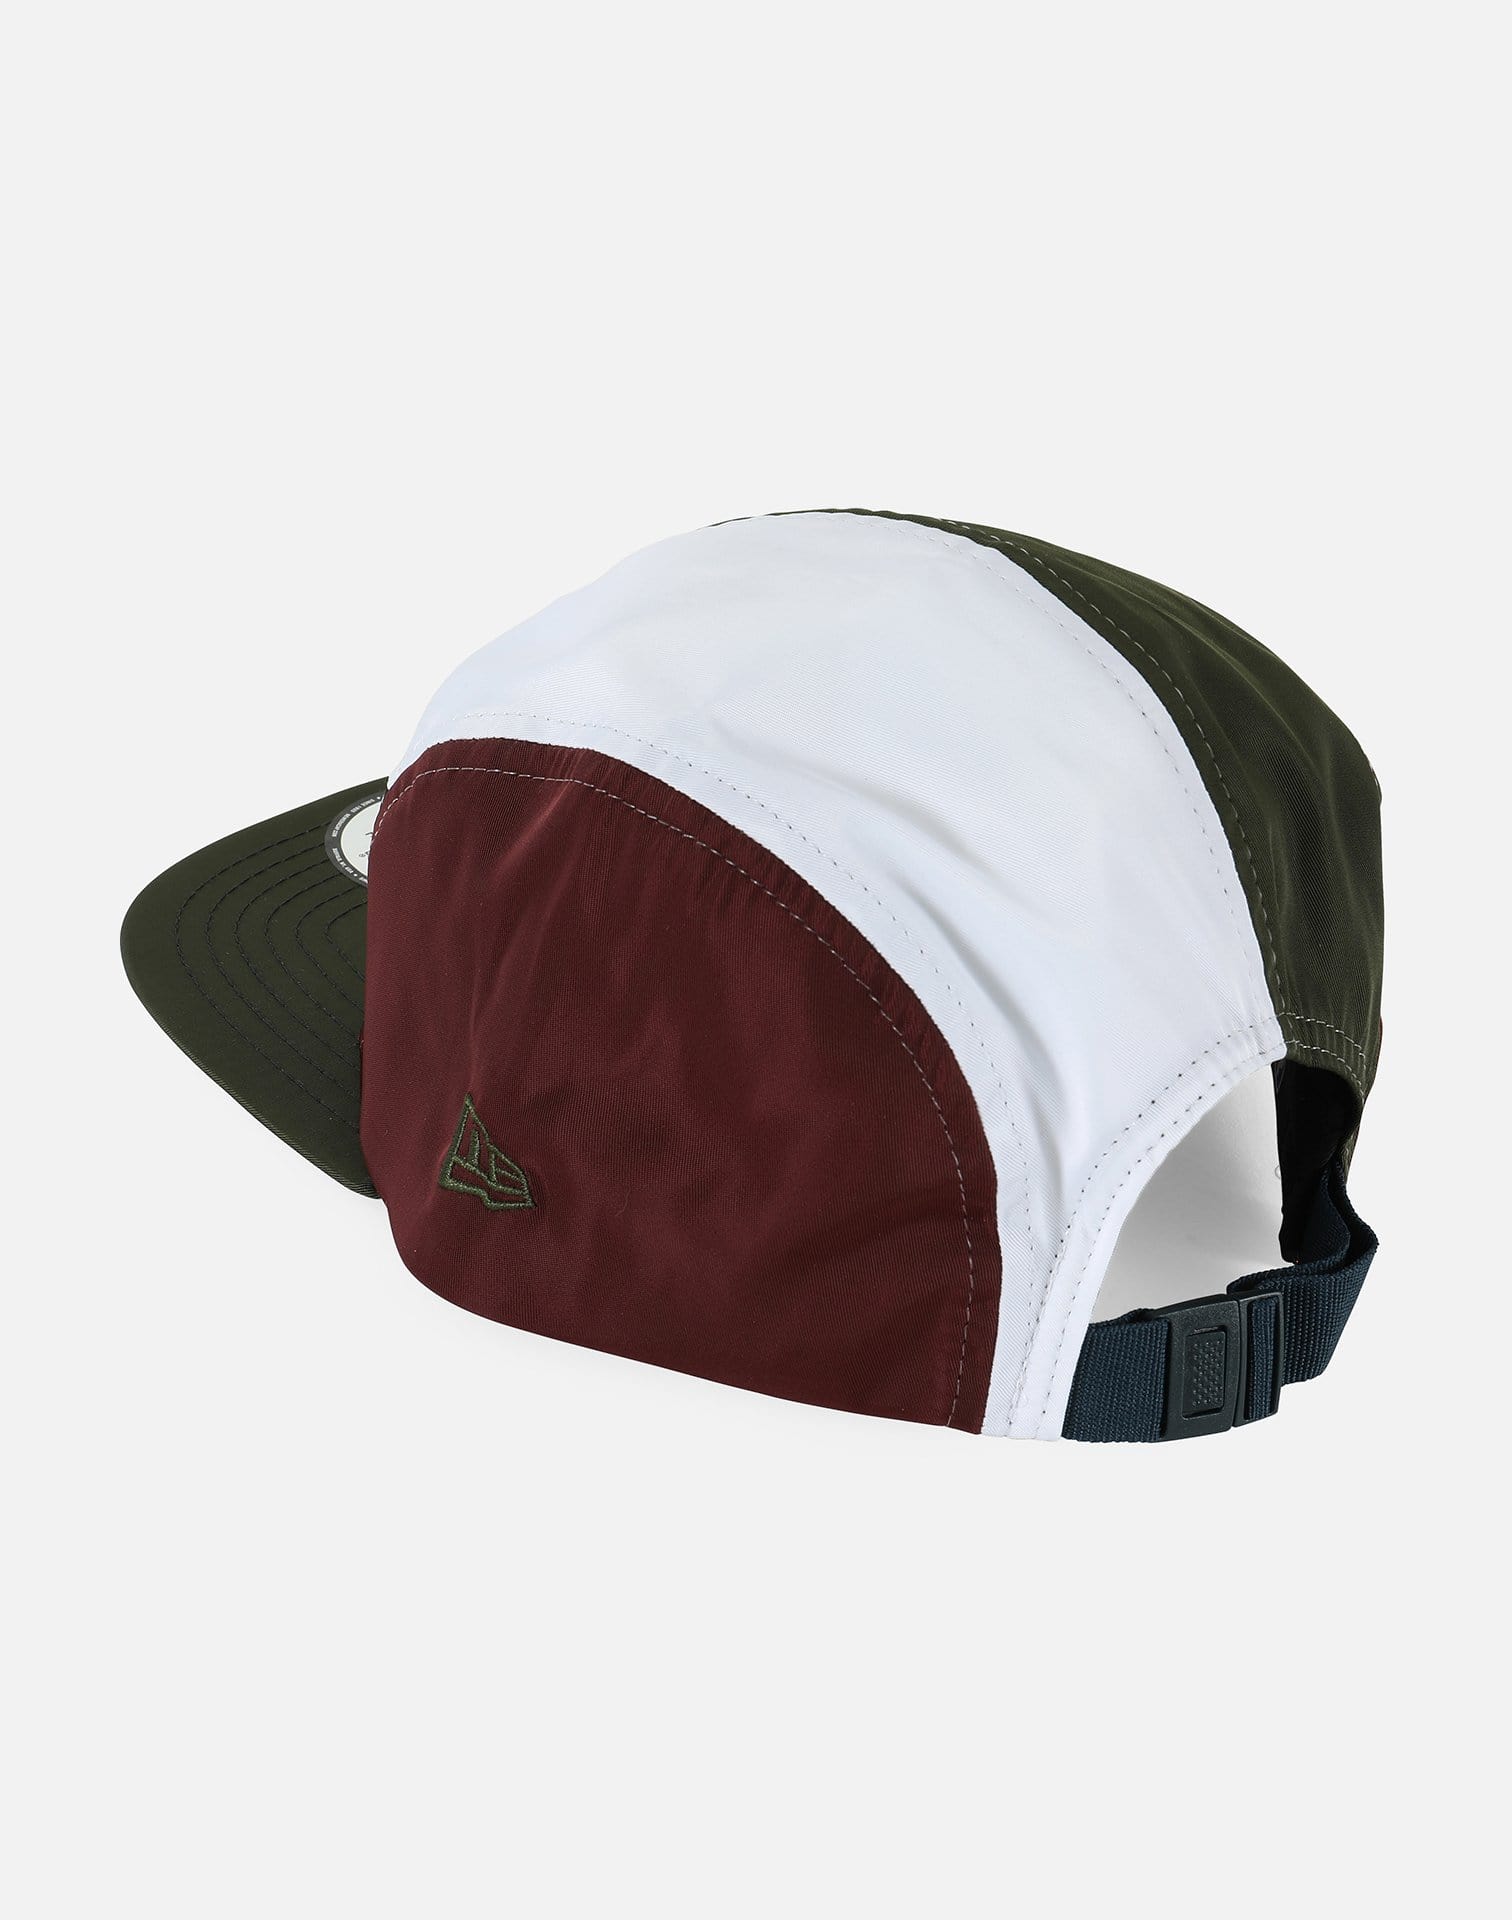 New Era Exclusive Customs NBA Cleveland Cavaliers Camper 008 Strapback Hat